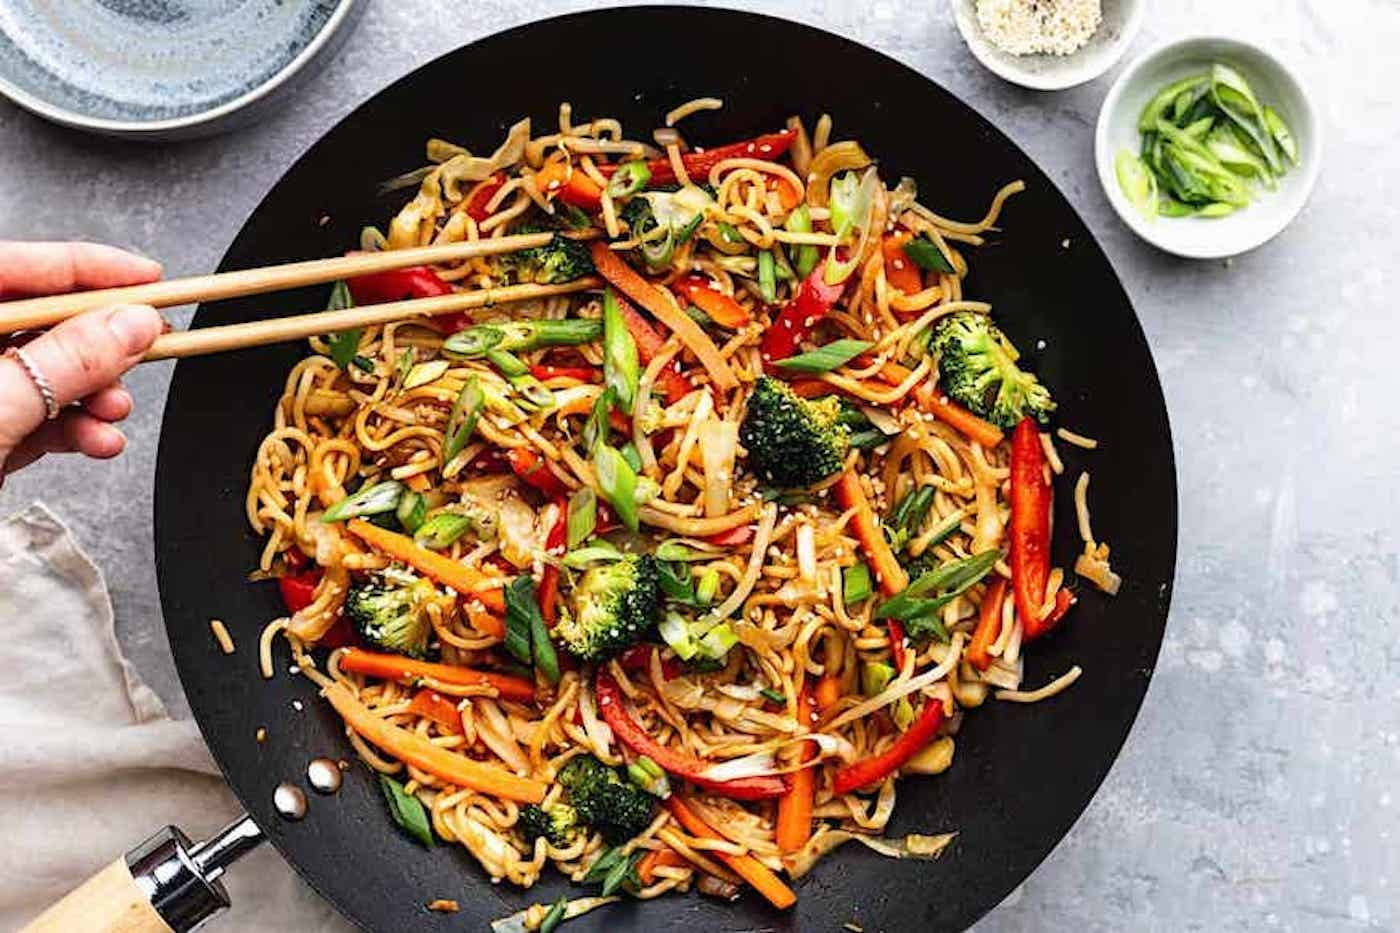 7 Vegetarian Chinese Food Recipes To Make at Home